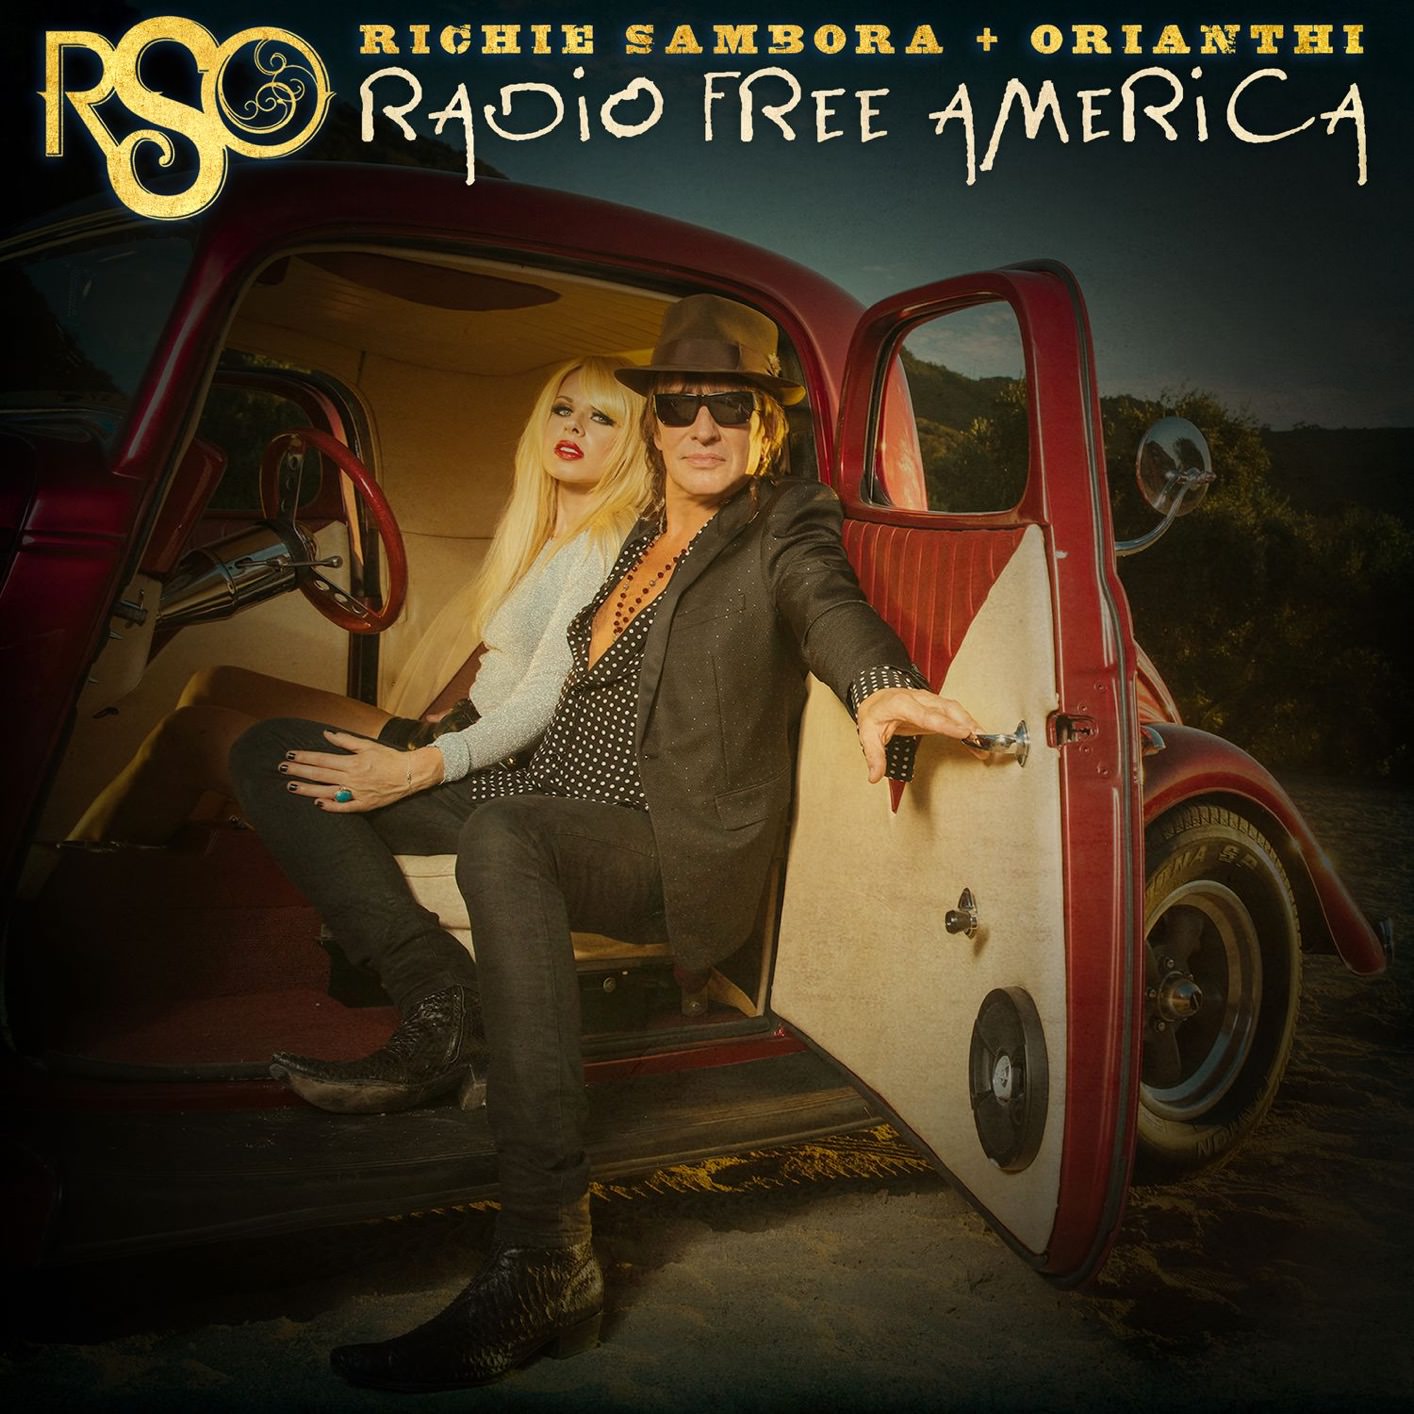 RSO (Richie Sambora + Orianthi) - Radio Free America (2018) [FLAC 24bit/48kHz]